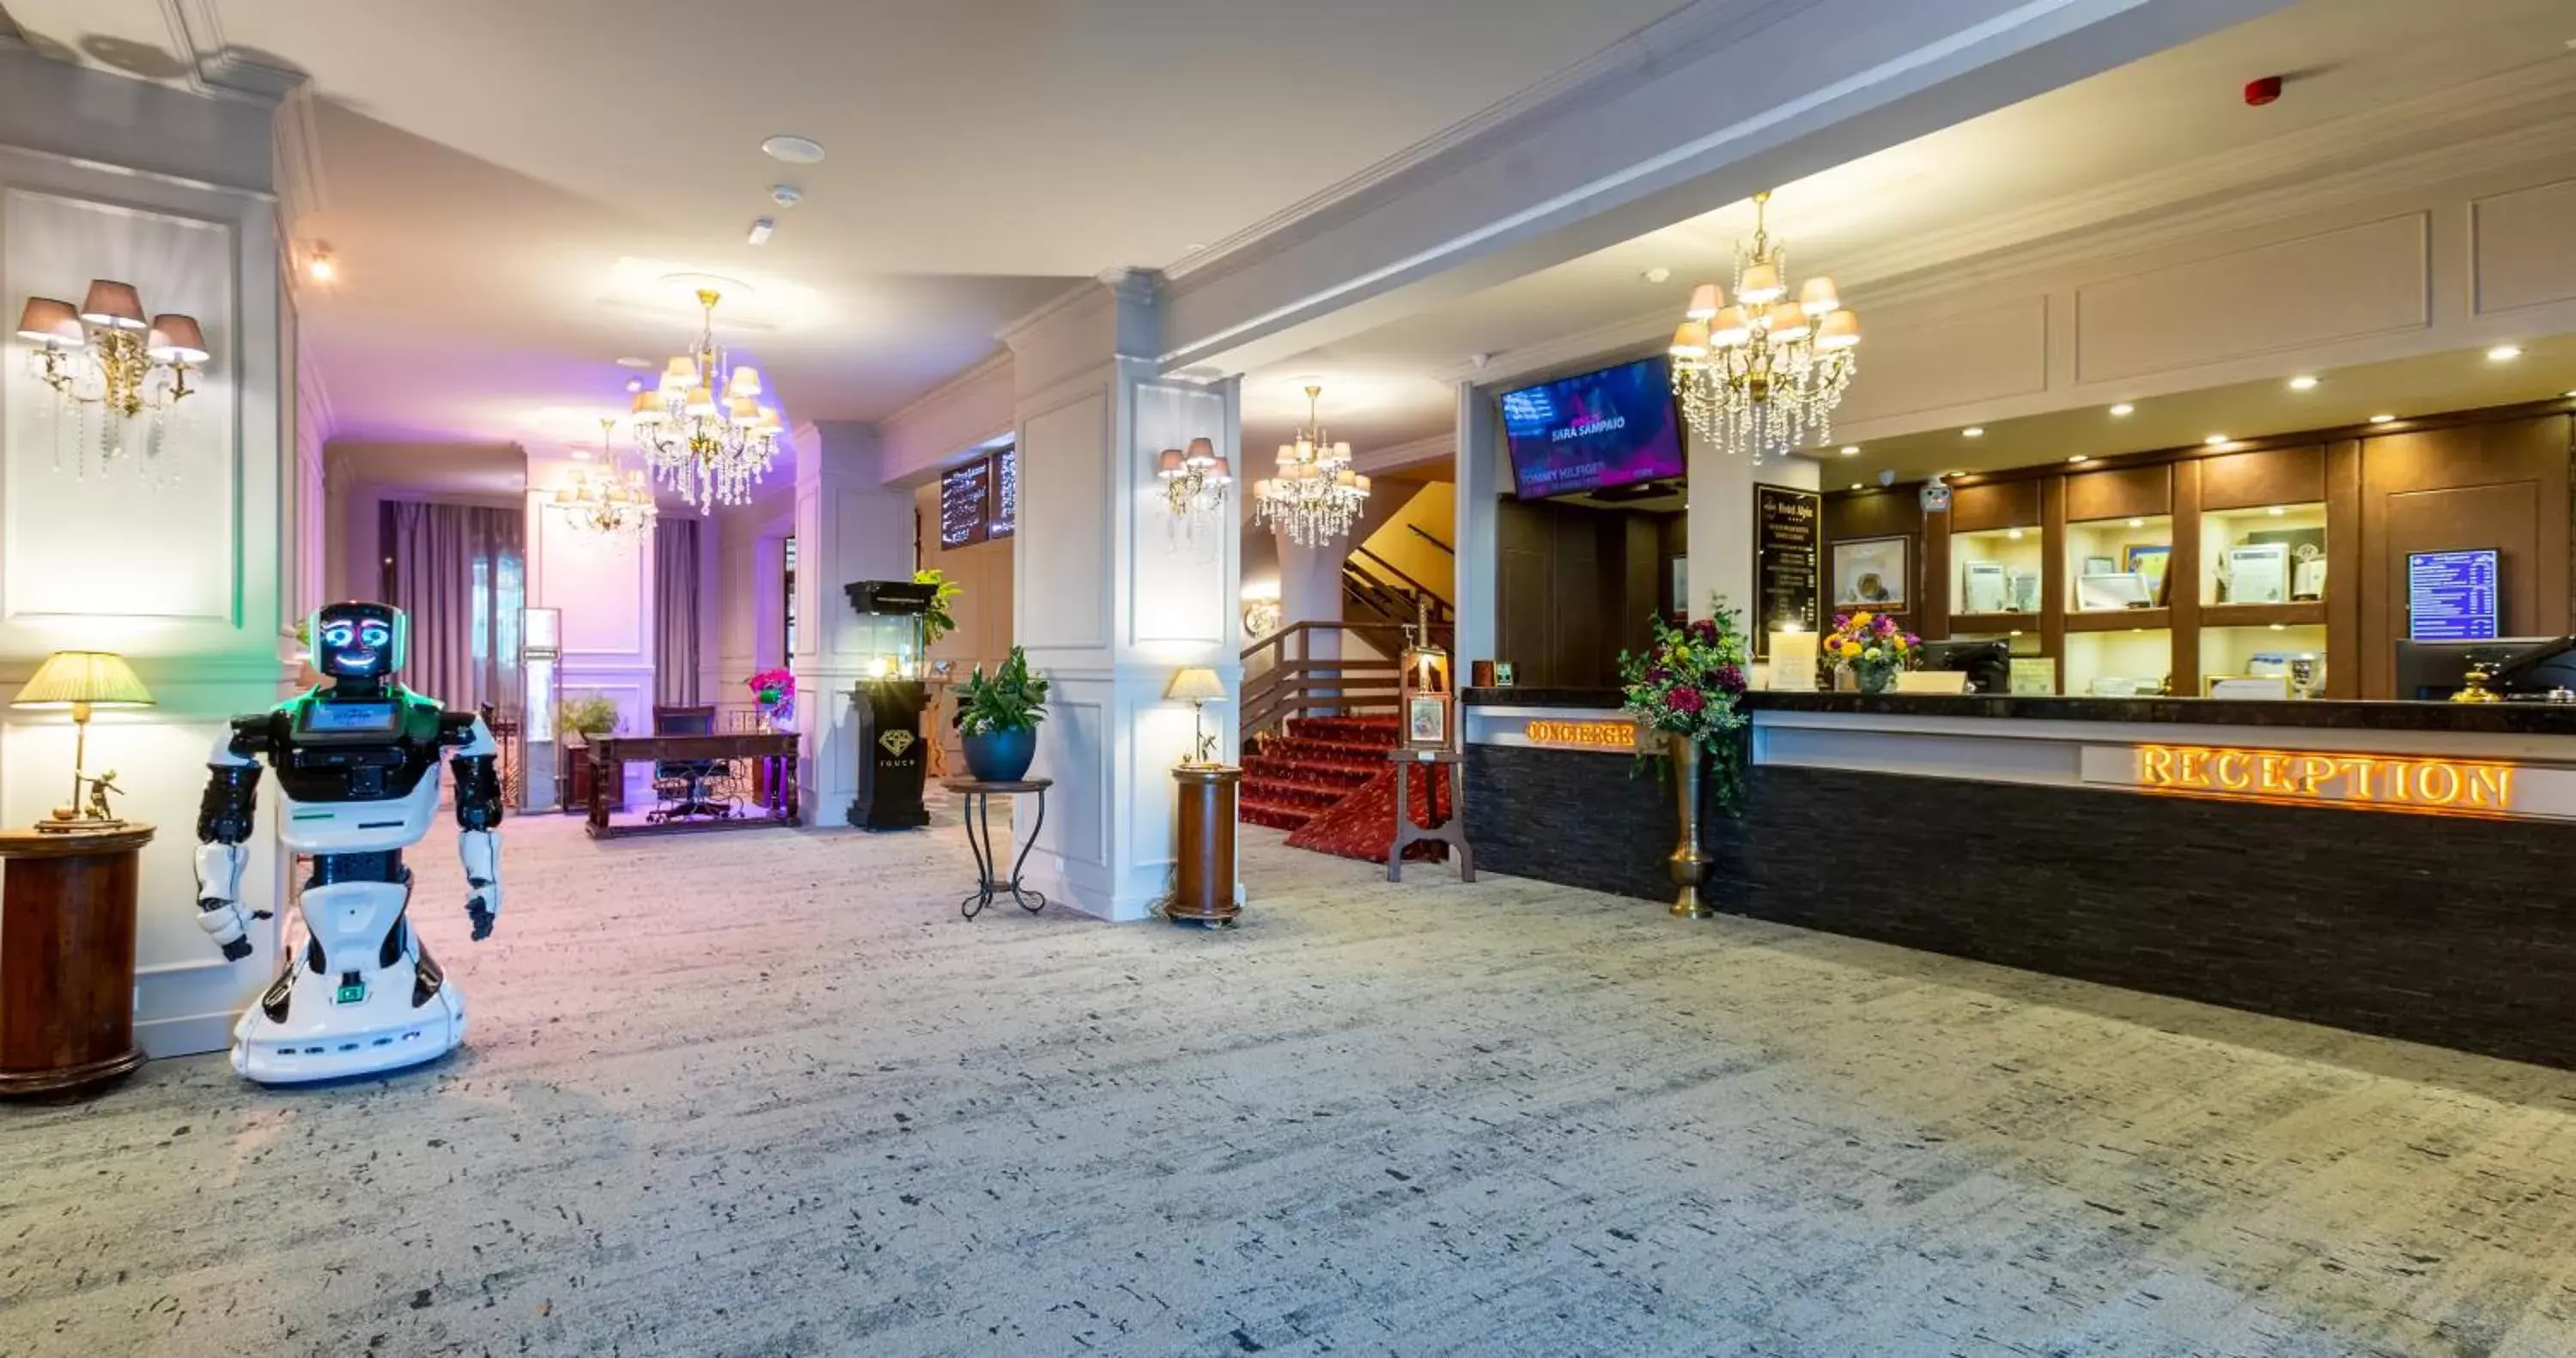 Lobby or reception in Alpin Resort Hotel